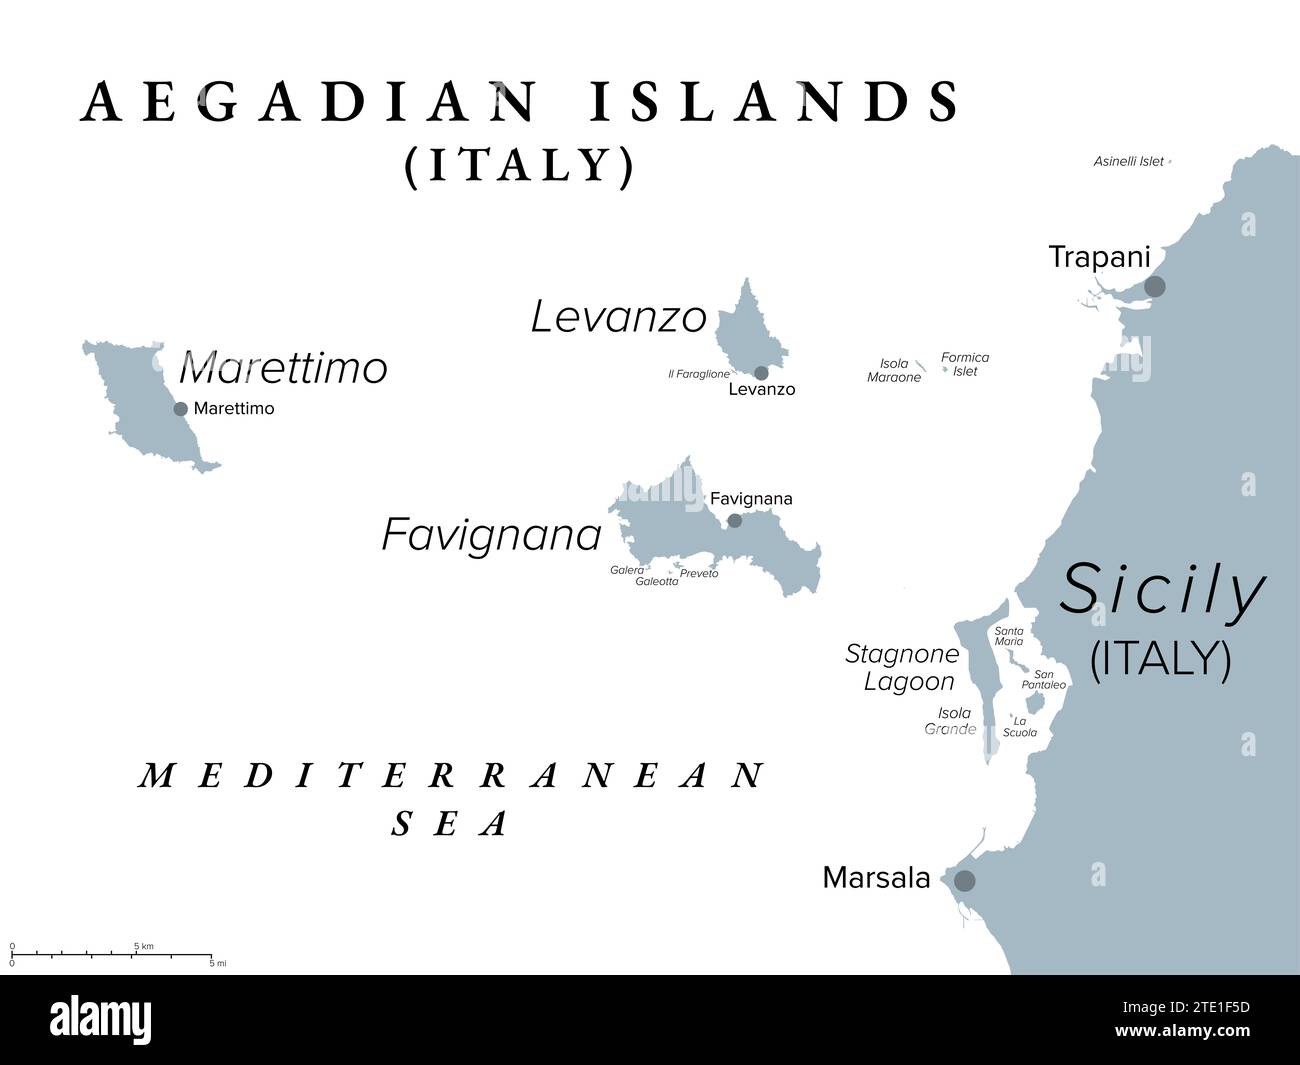 Aegadian Islands, Favignana, Levanzo, Marettimo, political map. Group of small mountainous islands in the Mediterranean Sea off the coast of Sicily. Stock Photo